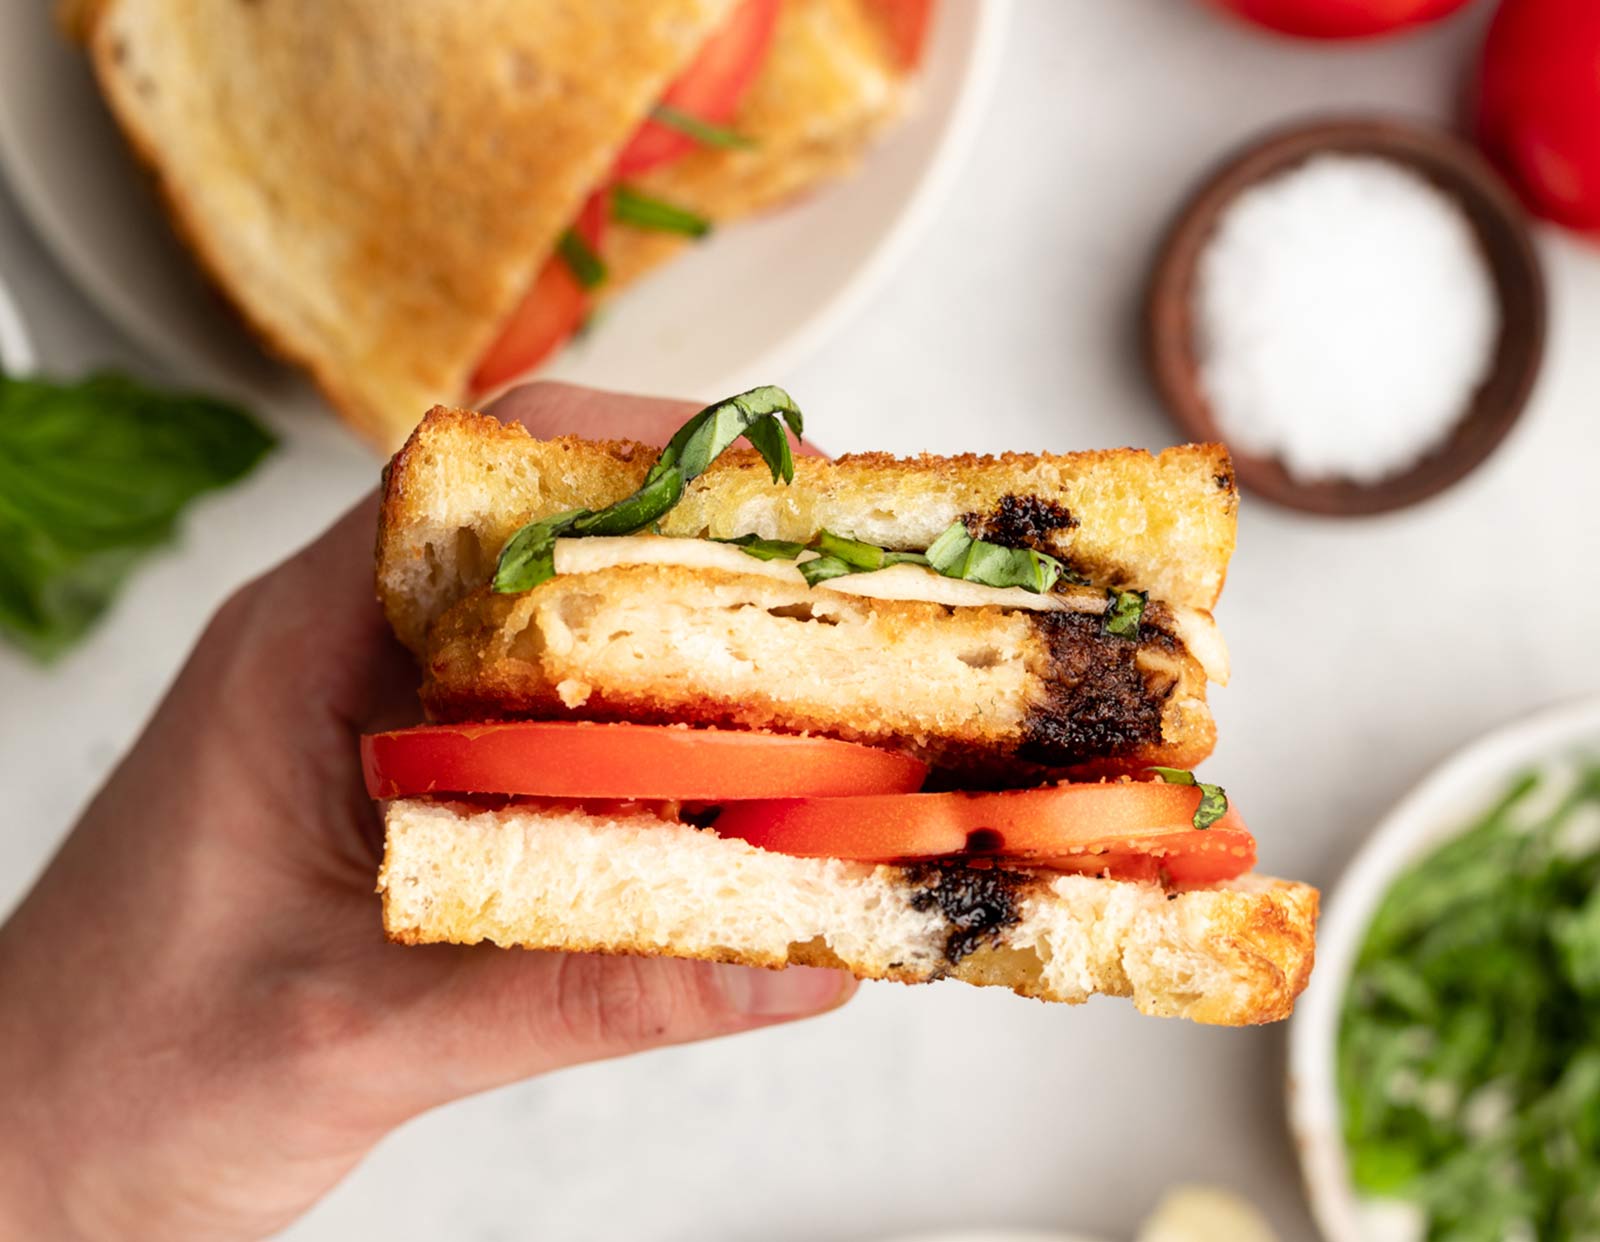 Keep It Green: 7 Super-Simple Vegan Lunch Ideas